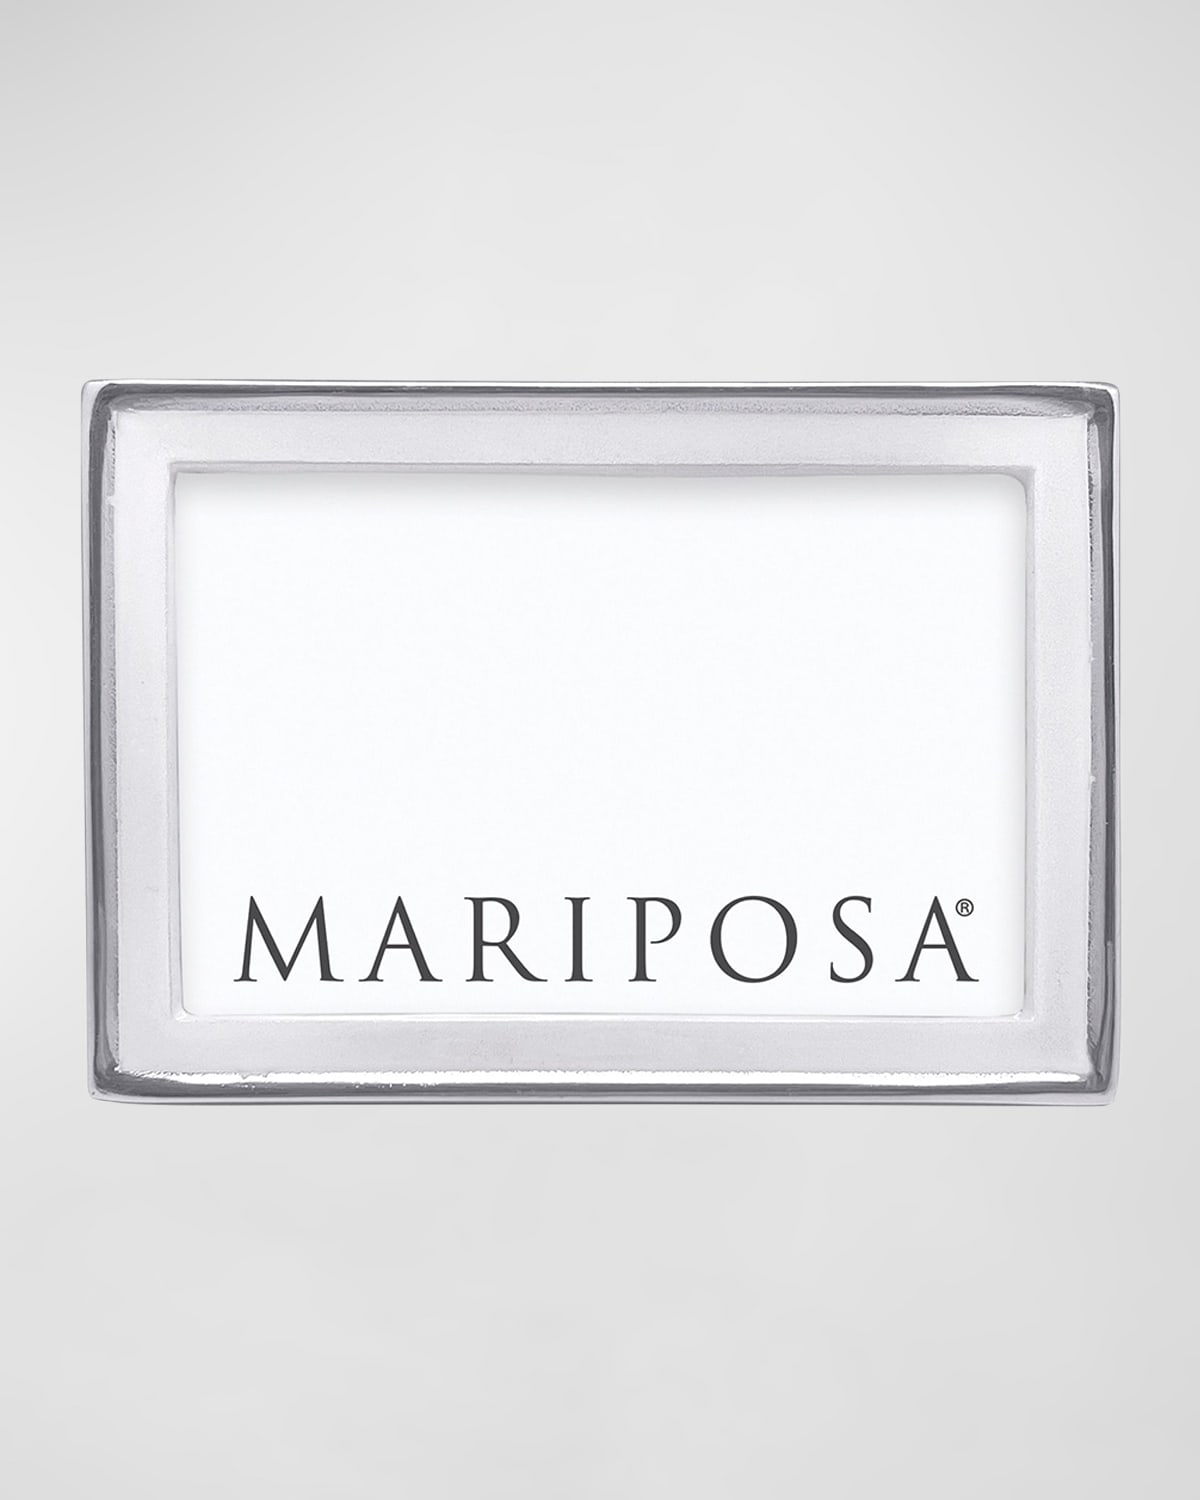 MARIPOSA SIGNATURE WHITE PICTURE FRAME, 4" X 6"